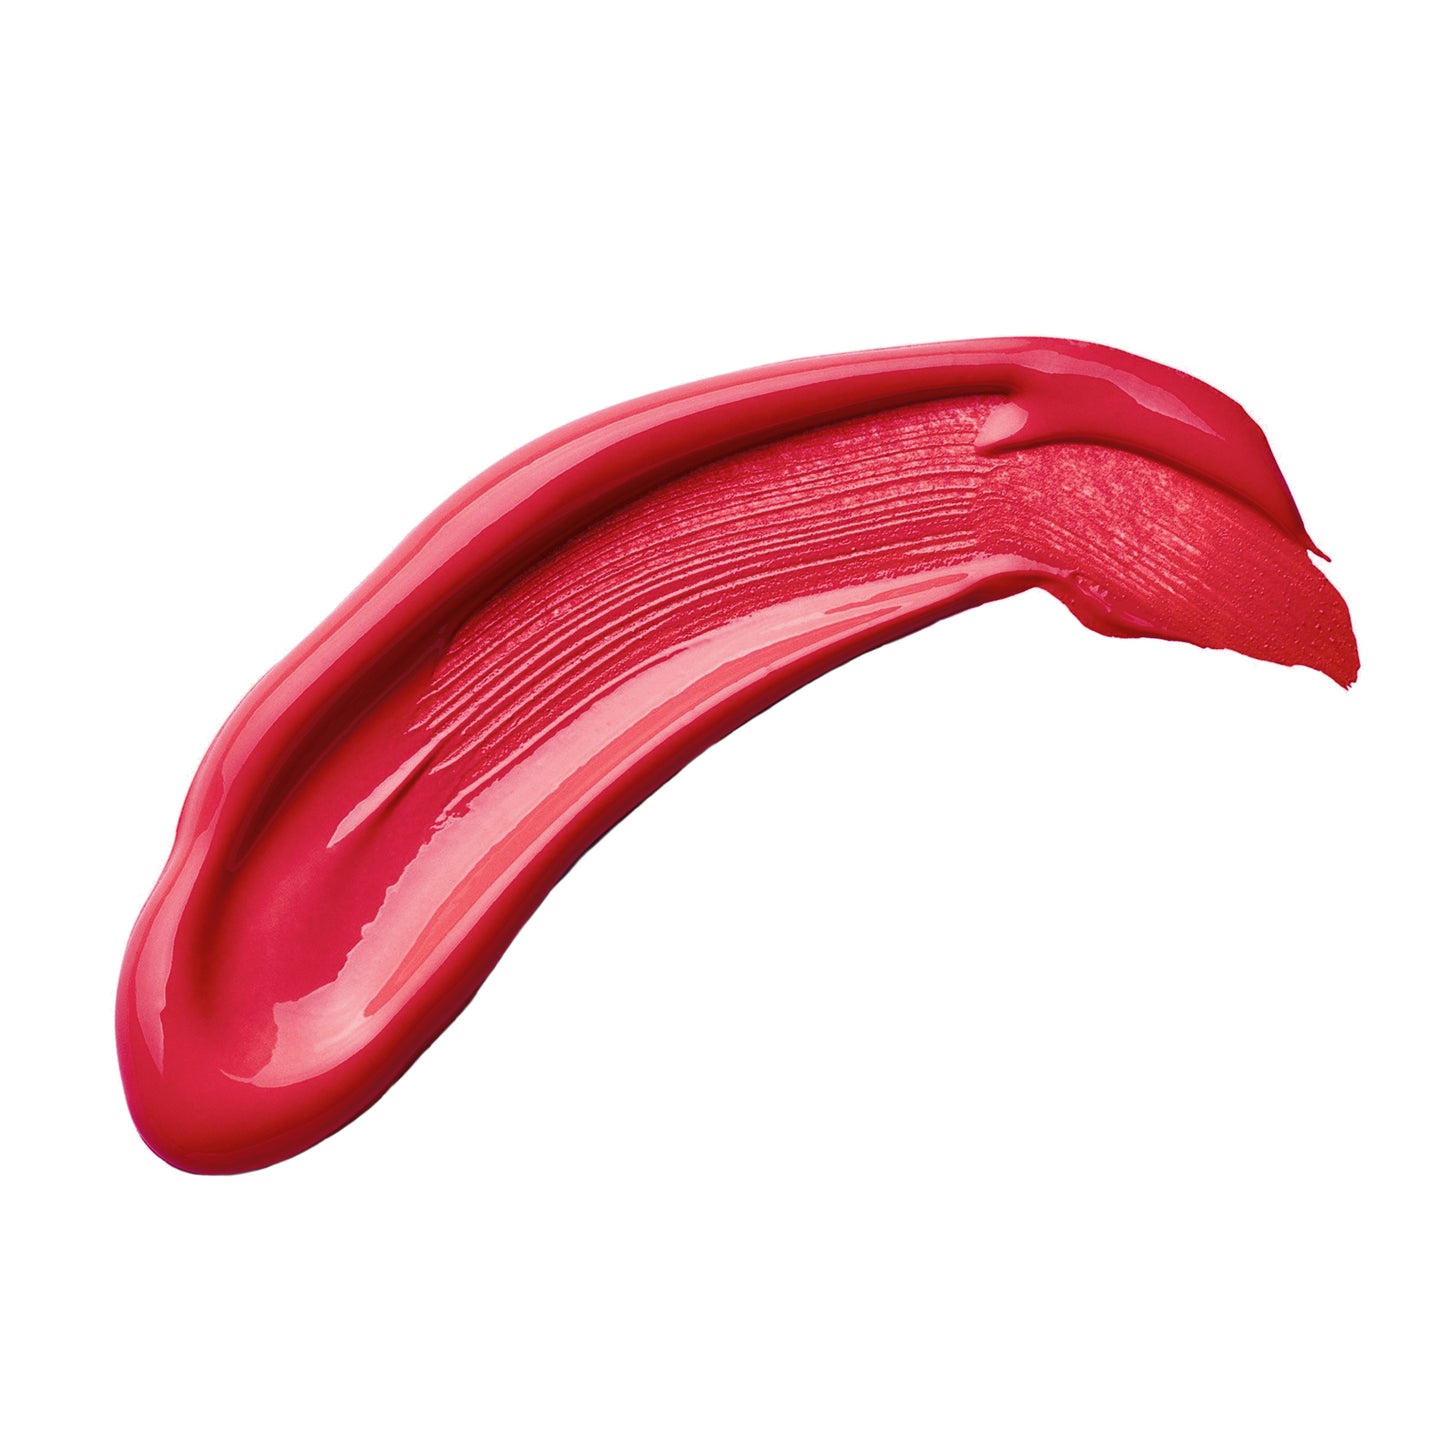 Stalno Crimson Gloss Finish - The Mirror Shine Liquid Lipstick